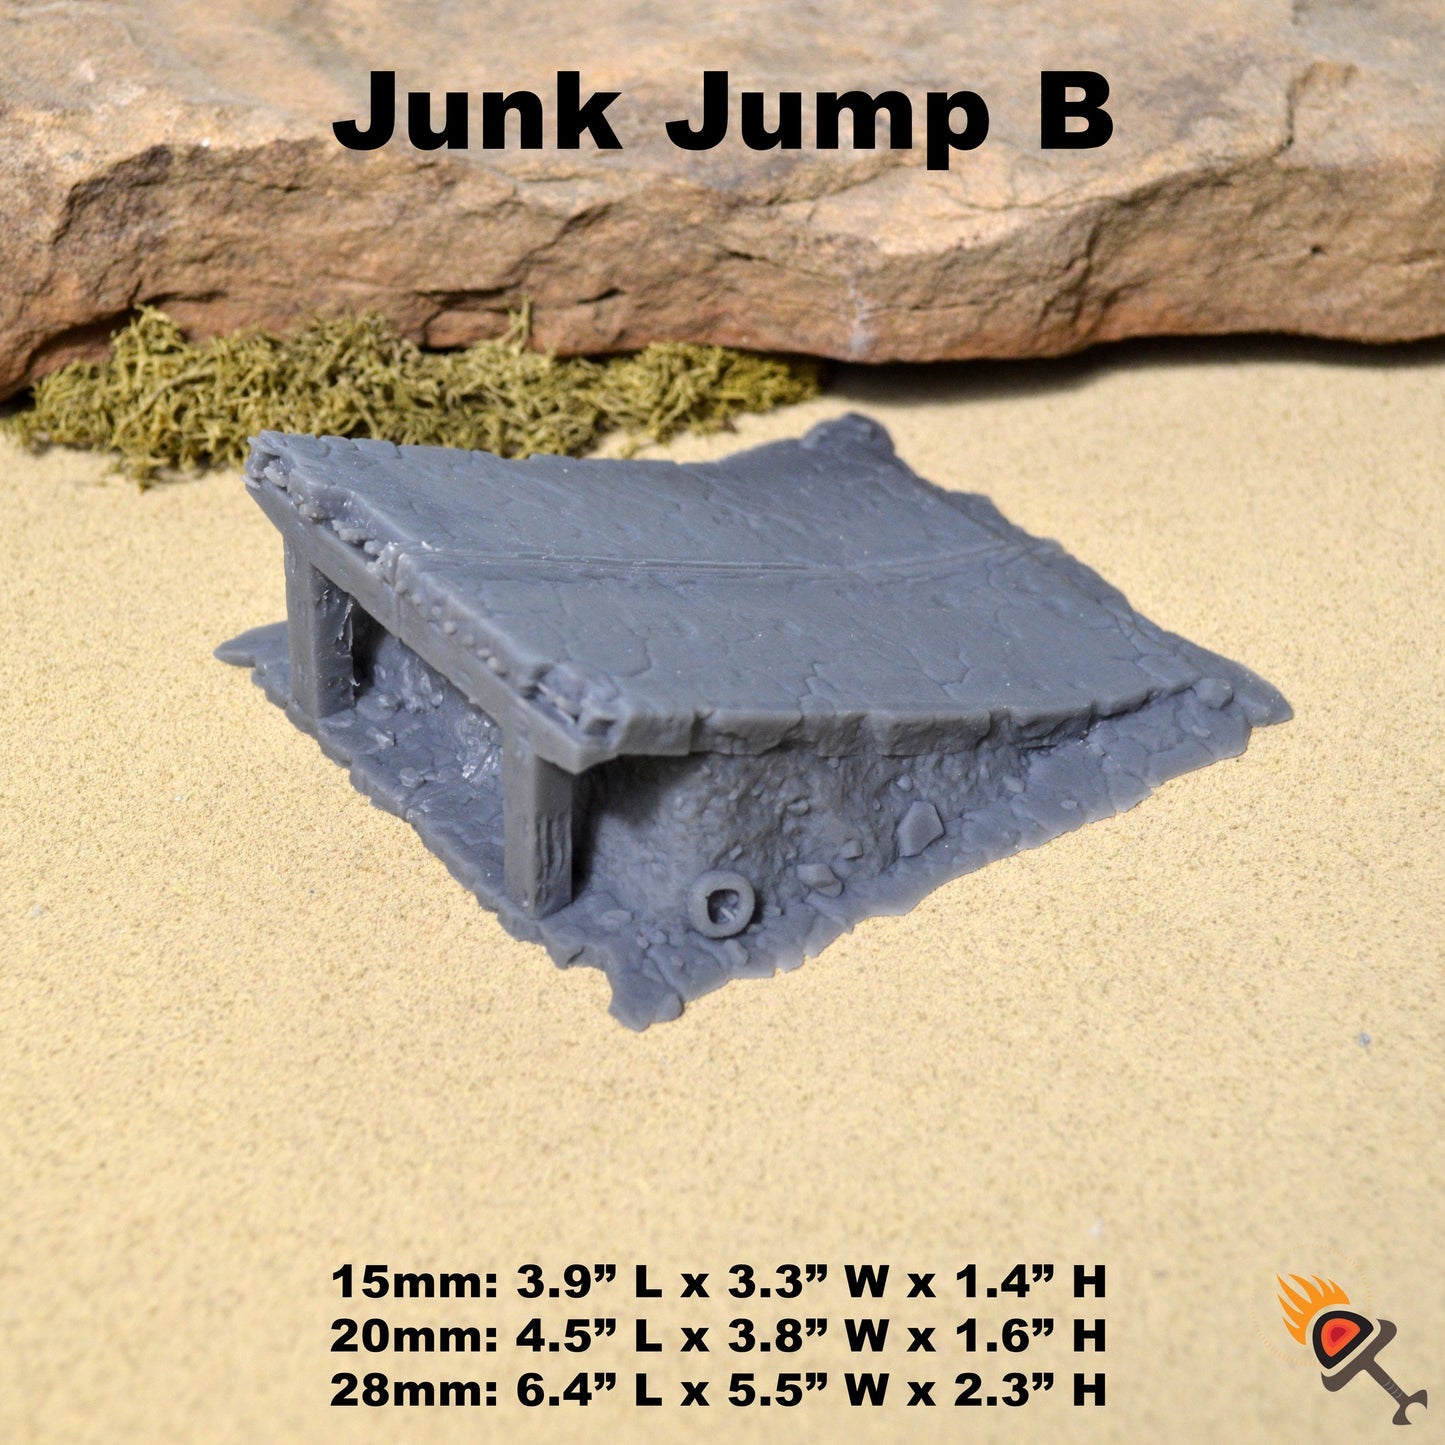 Junk Jumps 15mm 20mm 28mm for Gaslands Terrain, Urban Fallout Post Apocalyptic Race Ramp